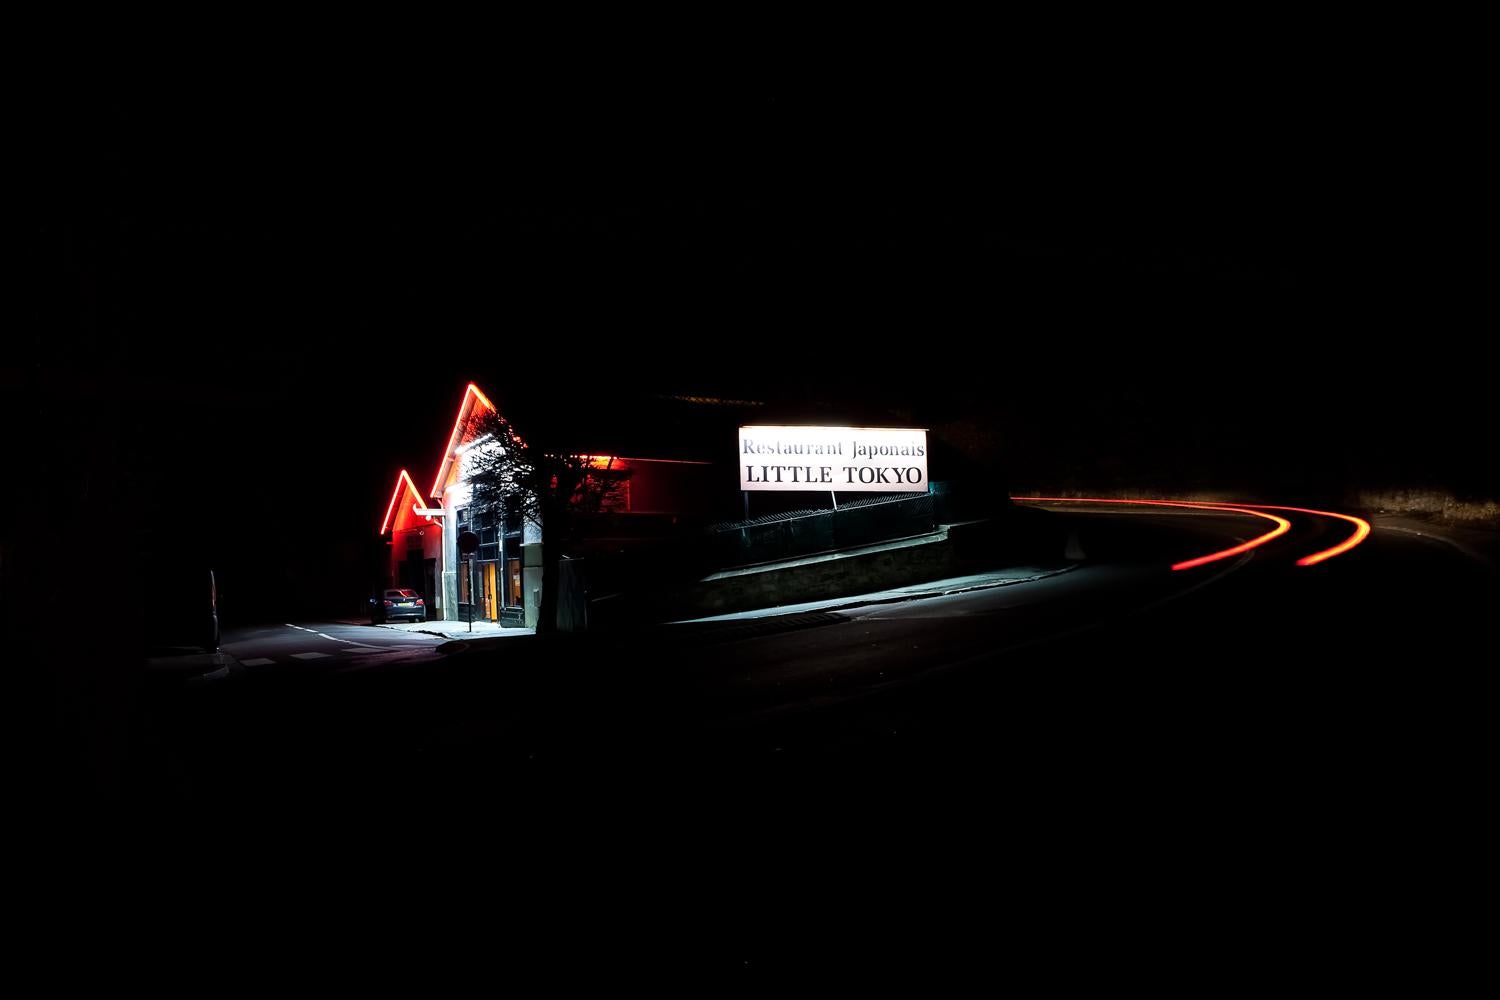 Little Tokyo by Xavier Dumoulin - Contemporary night photography, dark road